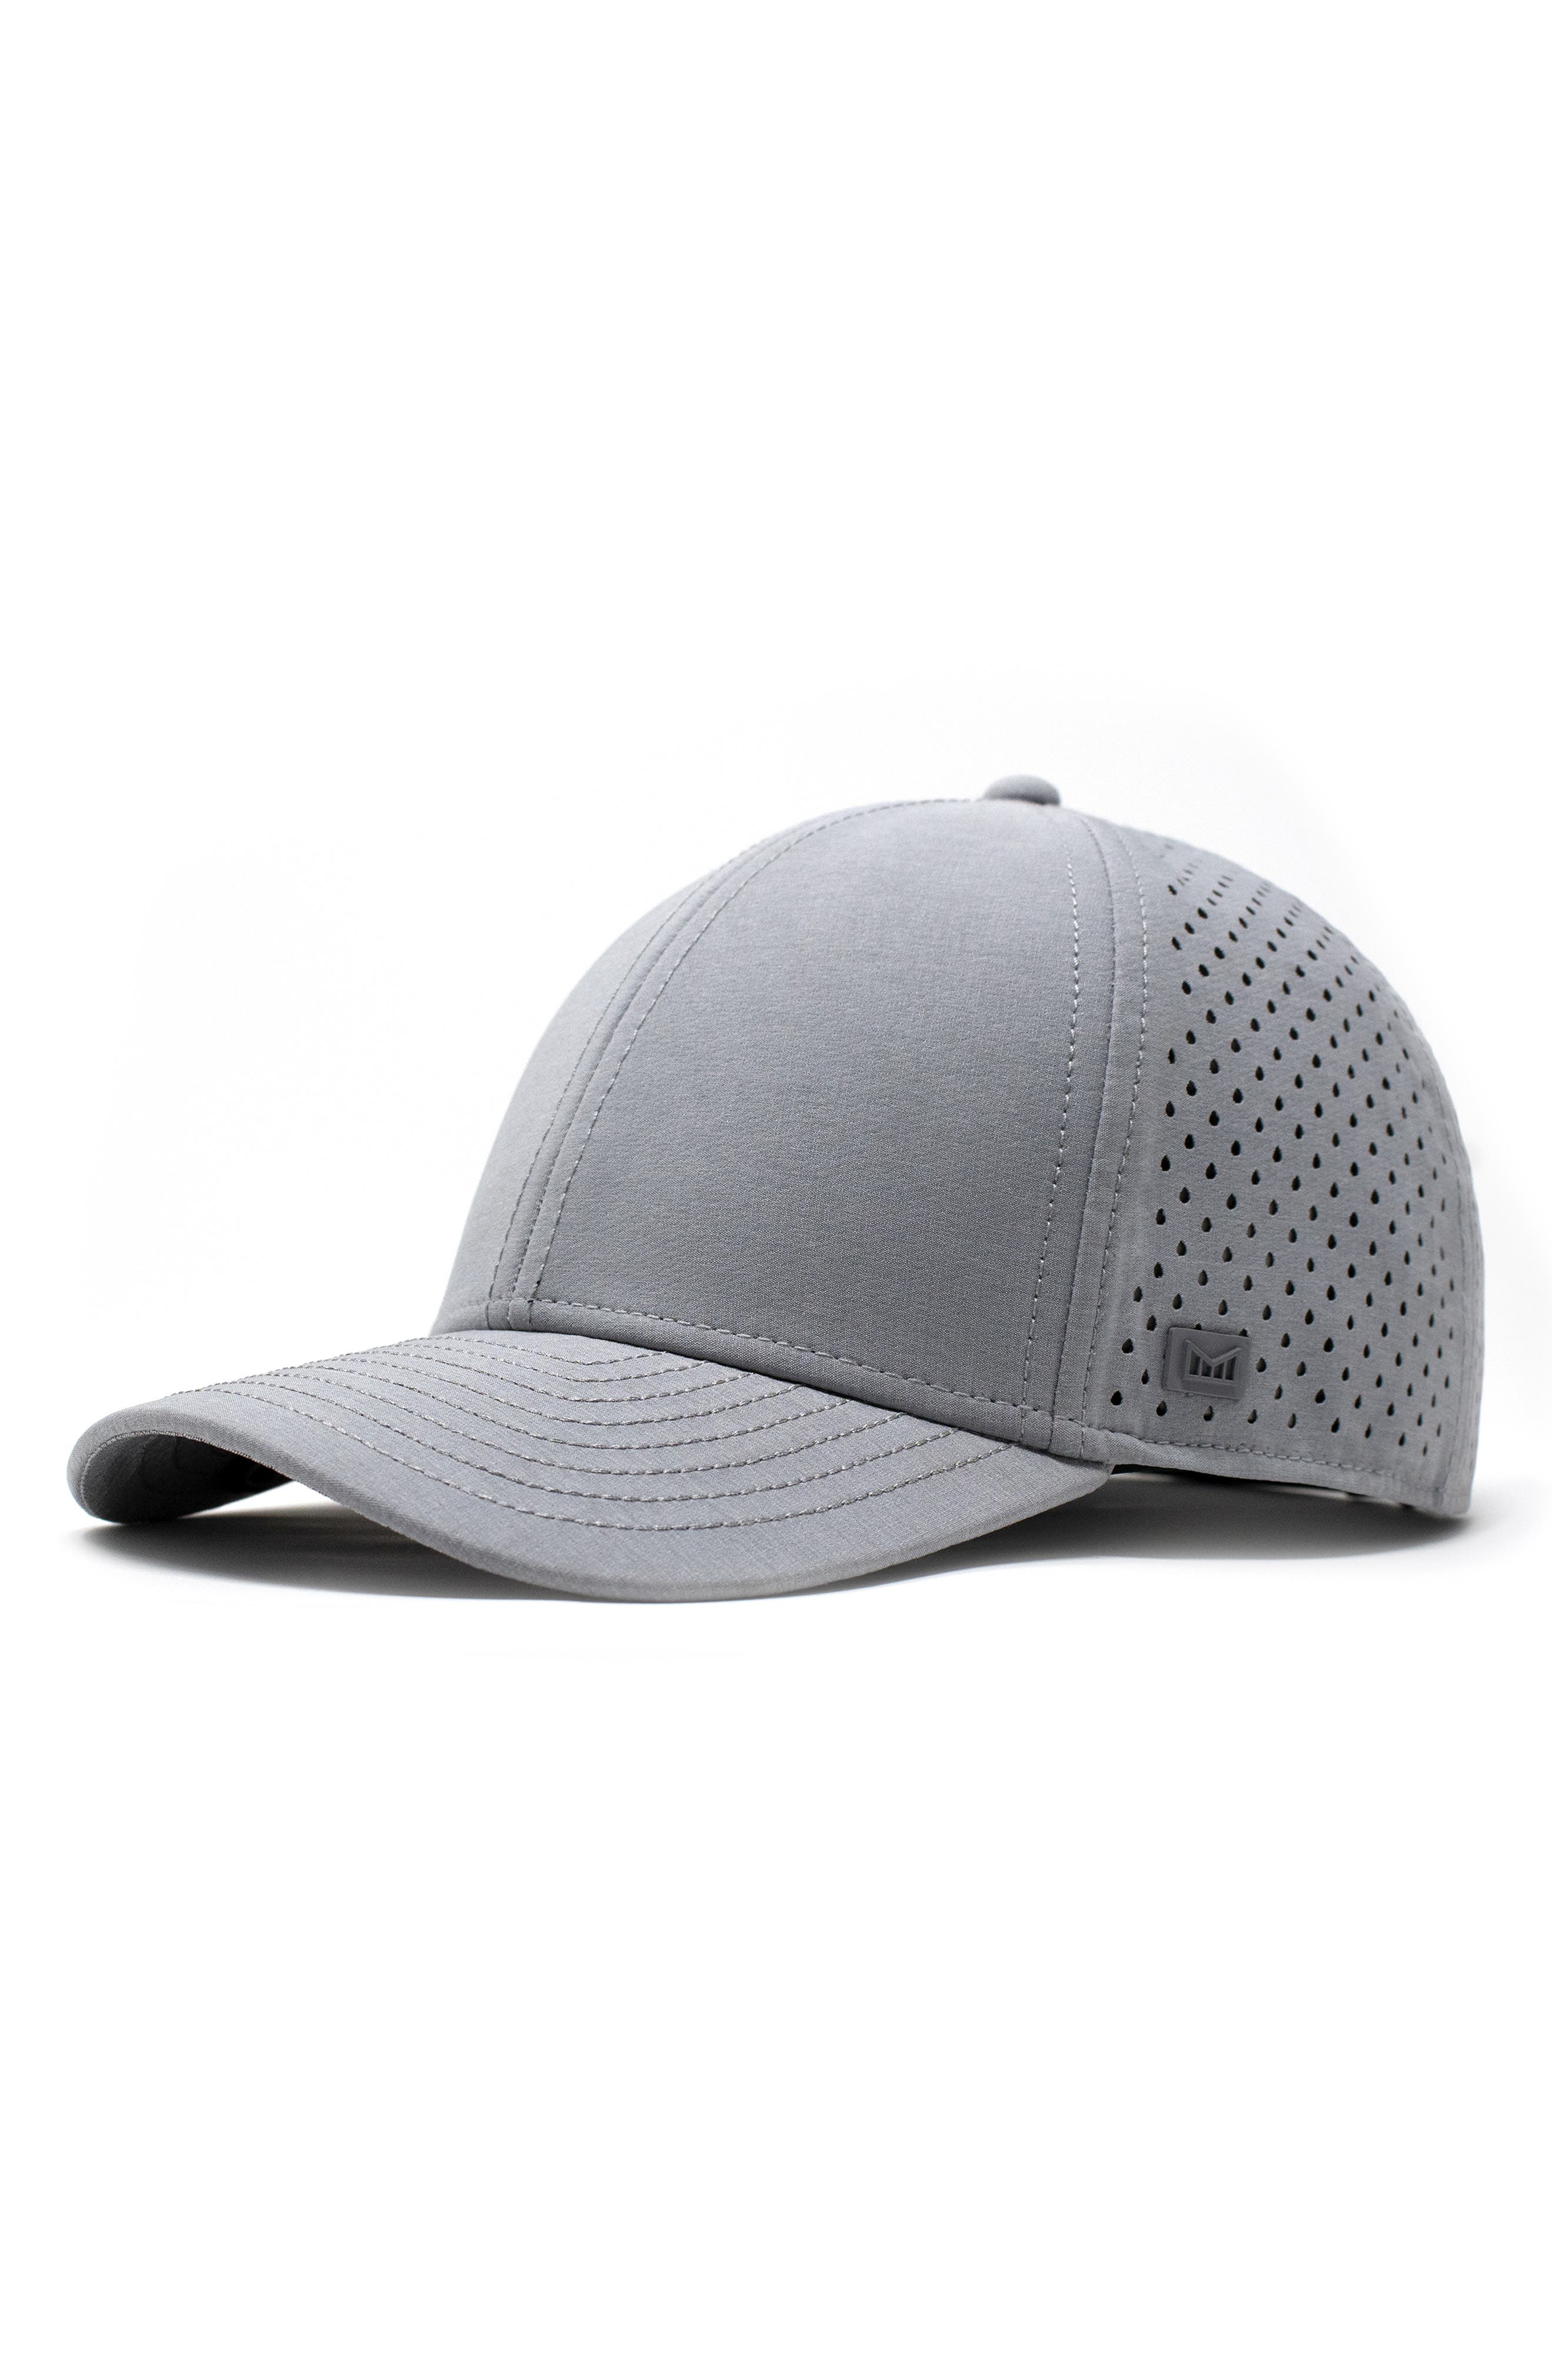 Mus_Tang Hip Hop Sun Mesh Low Profile Baseball Caps for Kids Ideal Adjustable Snapback Hat Unisex Black